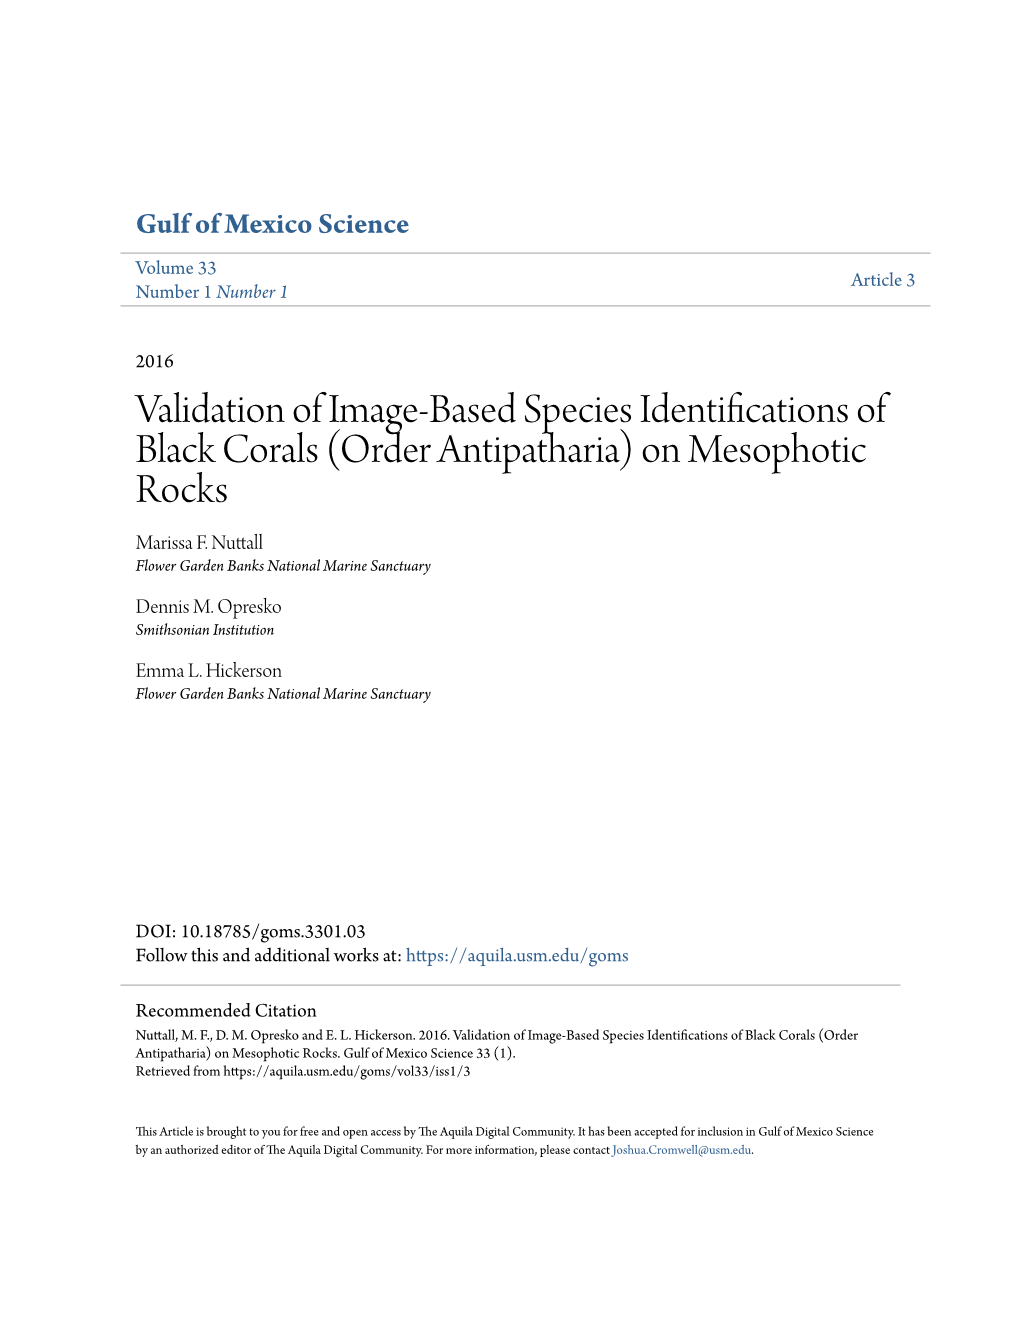 Validation of Image-Based Species Identifications of Black Corals (Order Antipatharia) on Mesophotic Rocks Marissa F